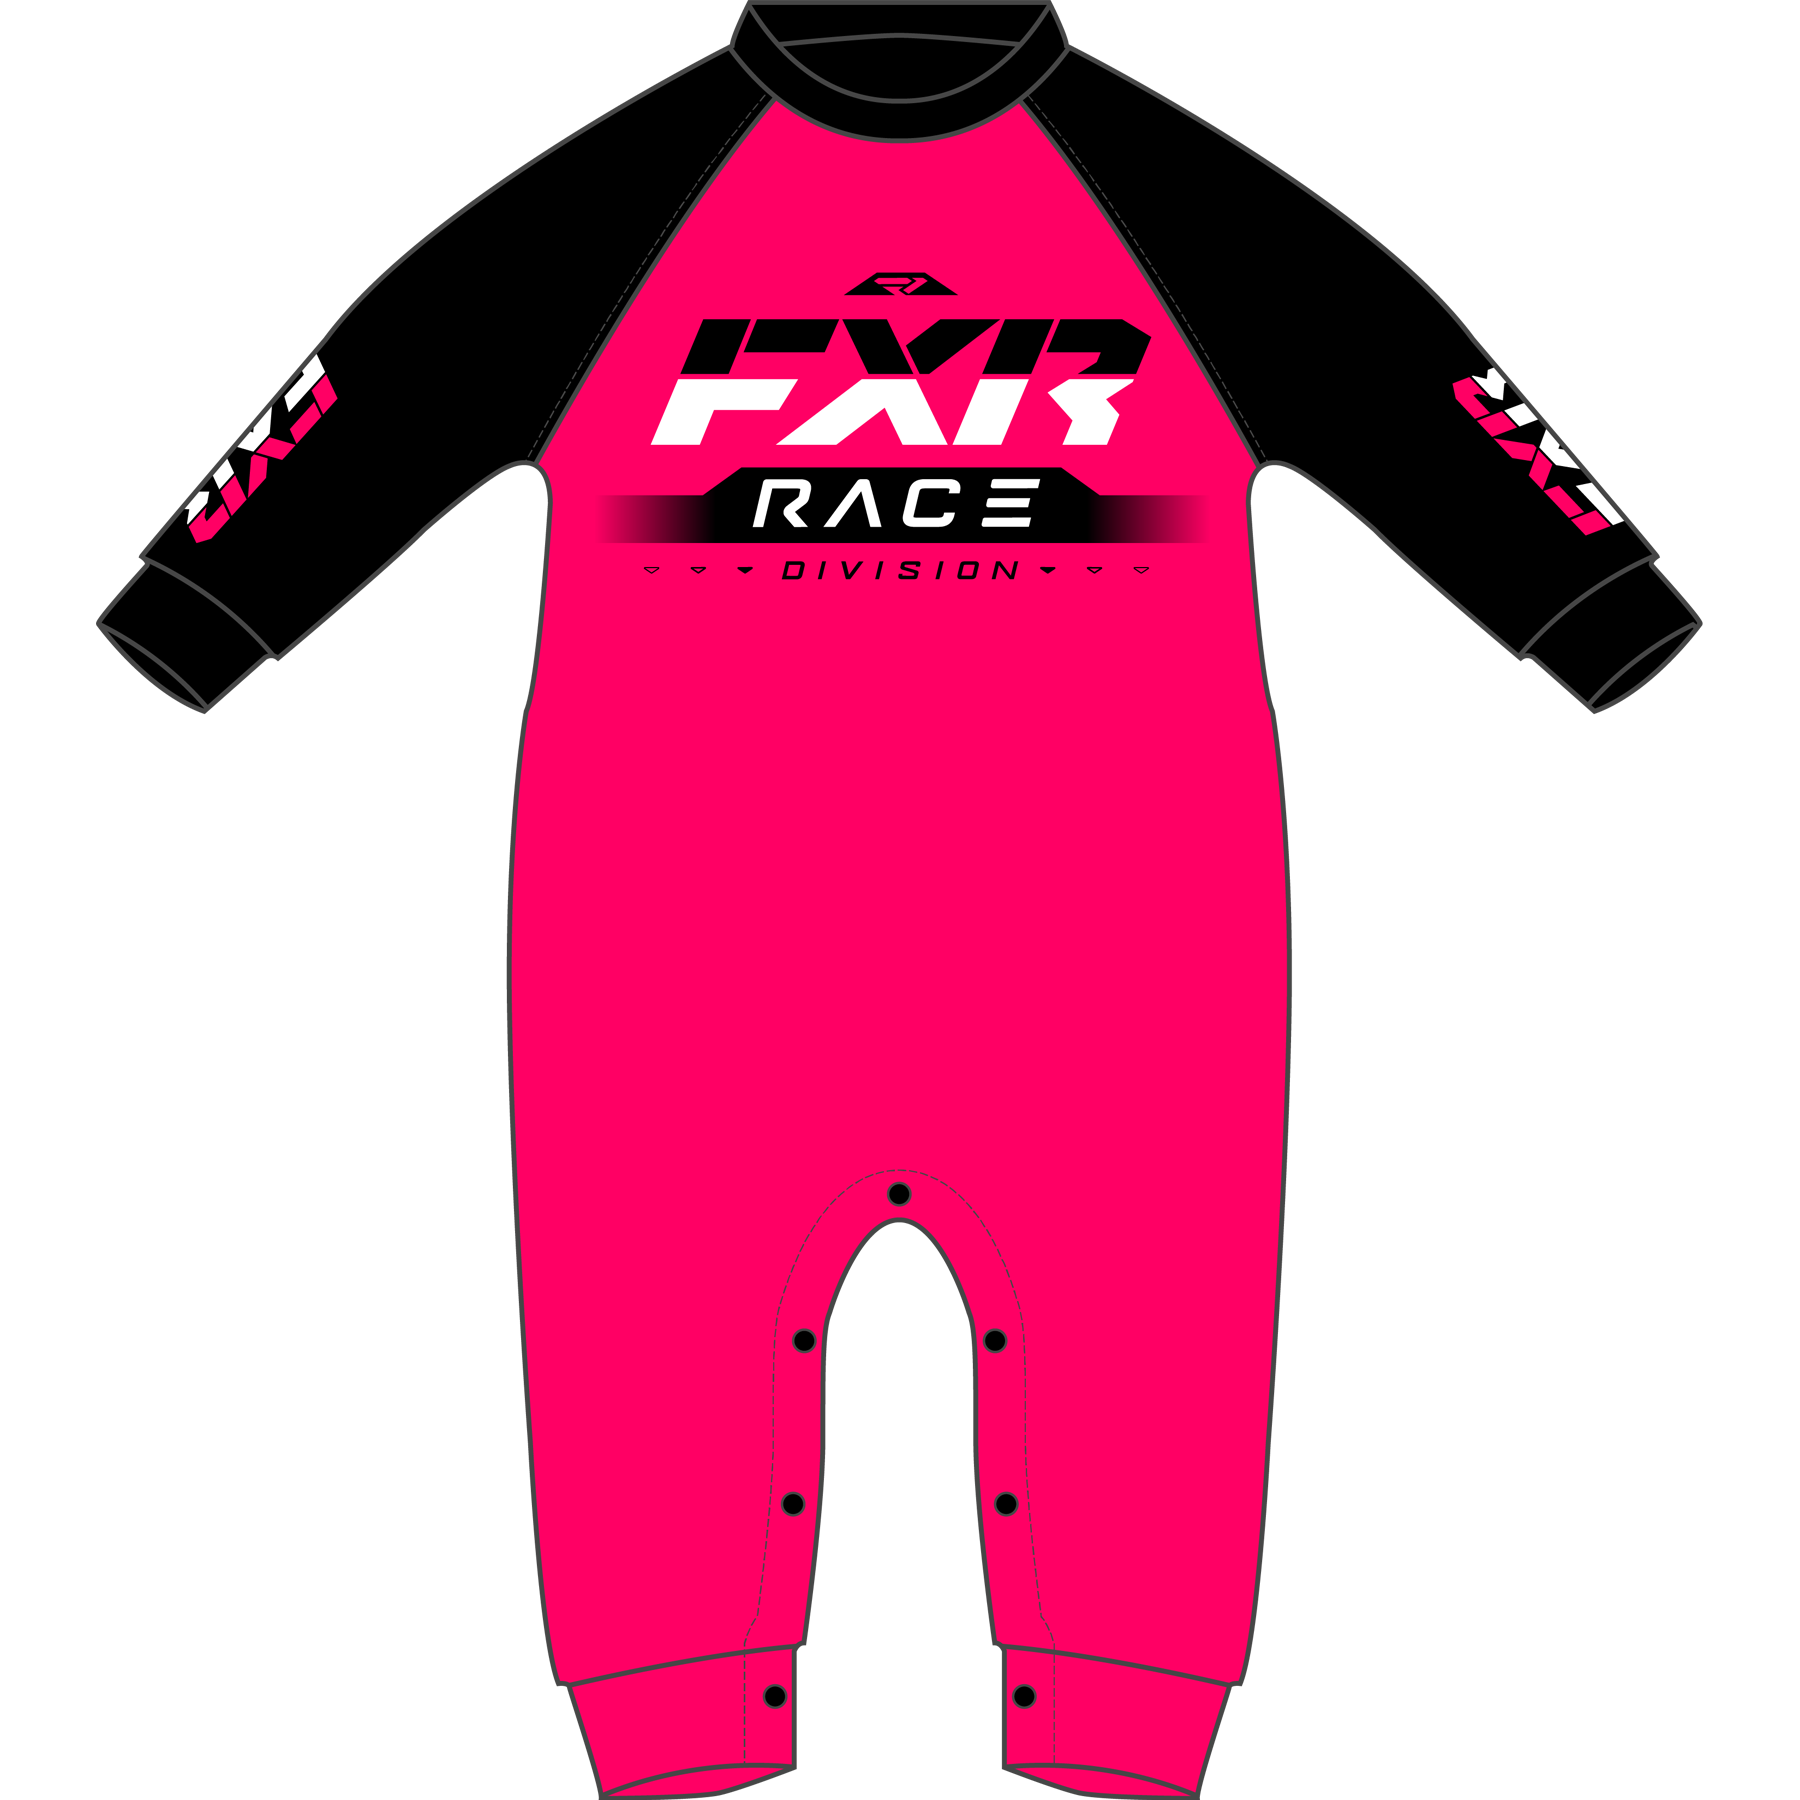 fxr racing pajamas kids infant race div onesie